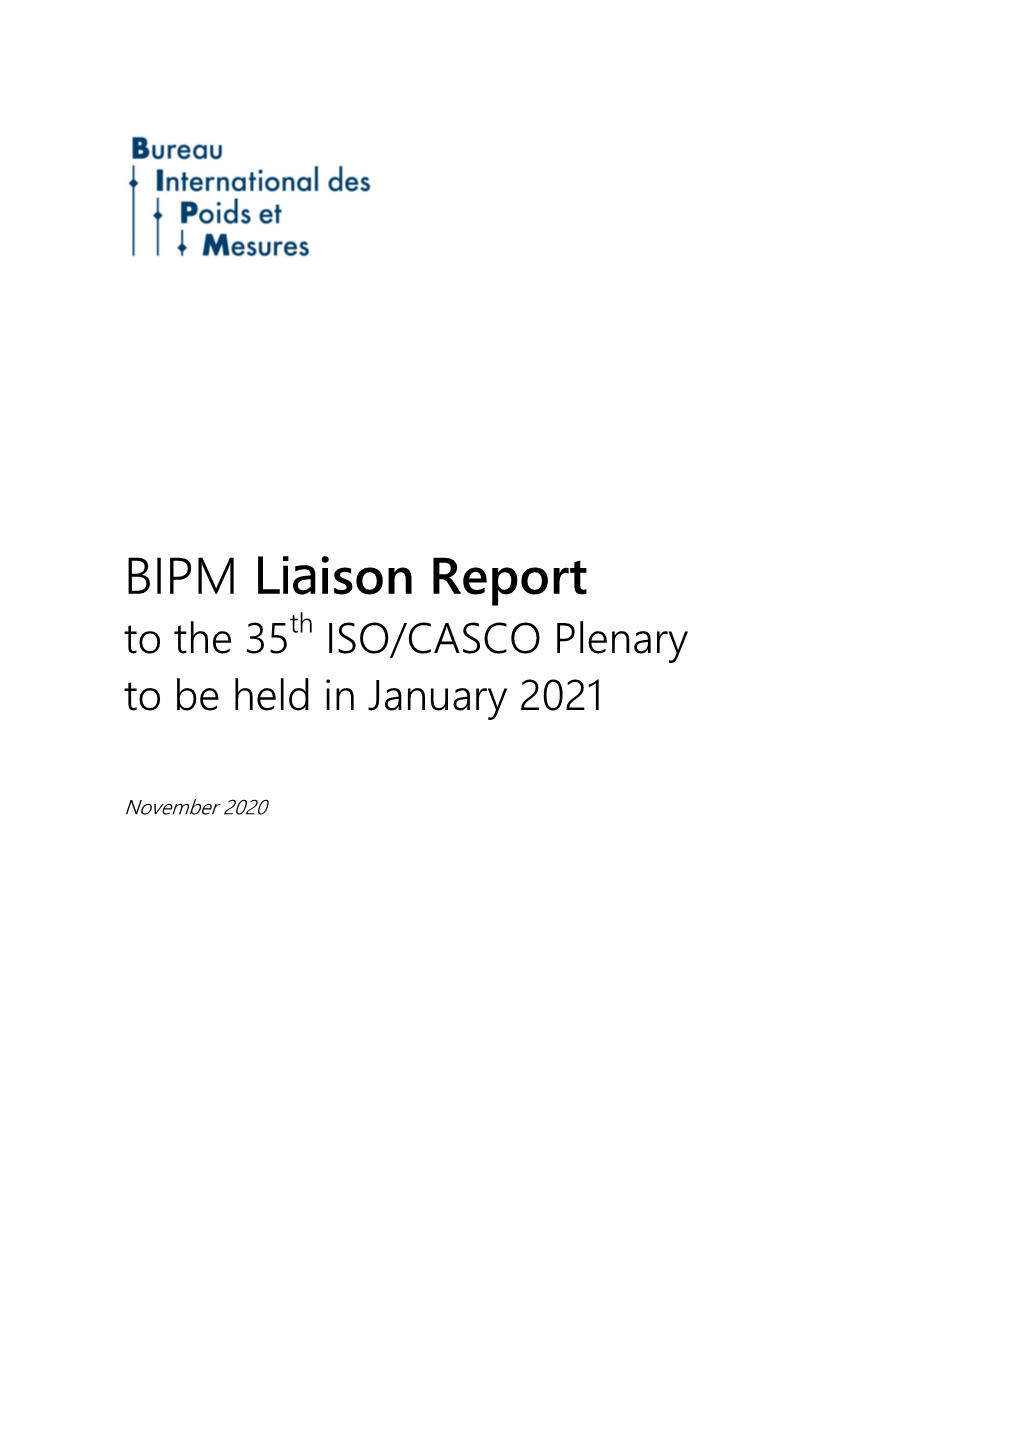 BIPM Liaison Report to ISO-CASCO Plenary